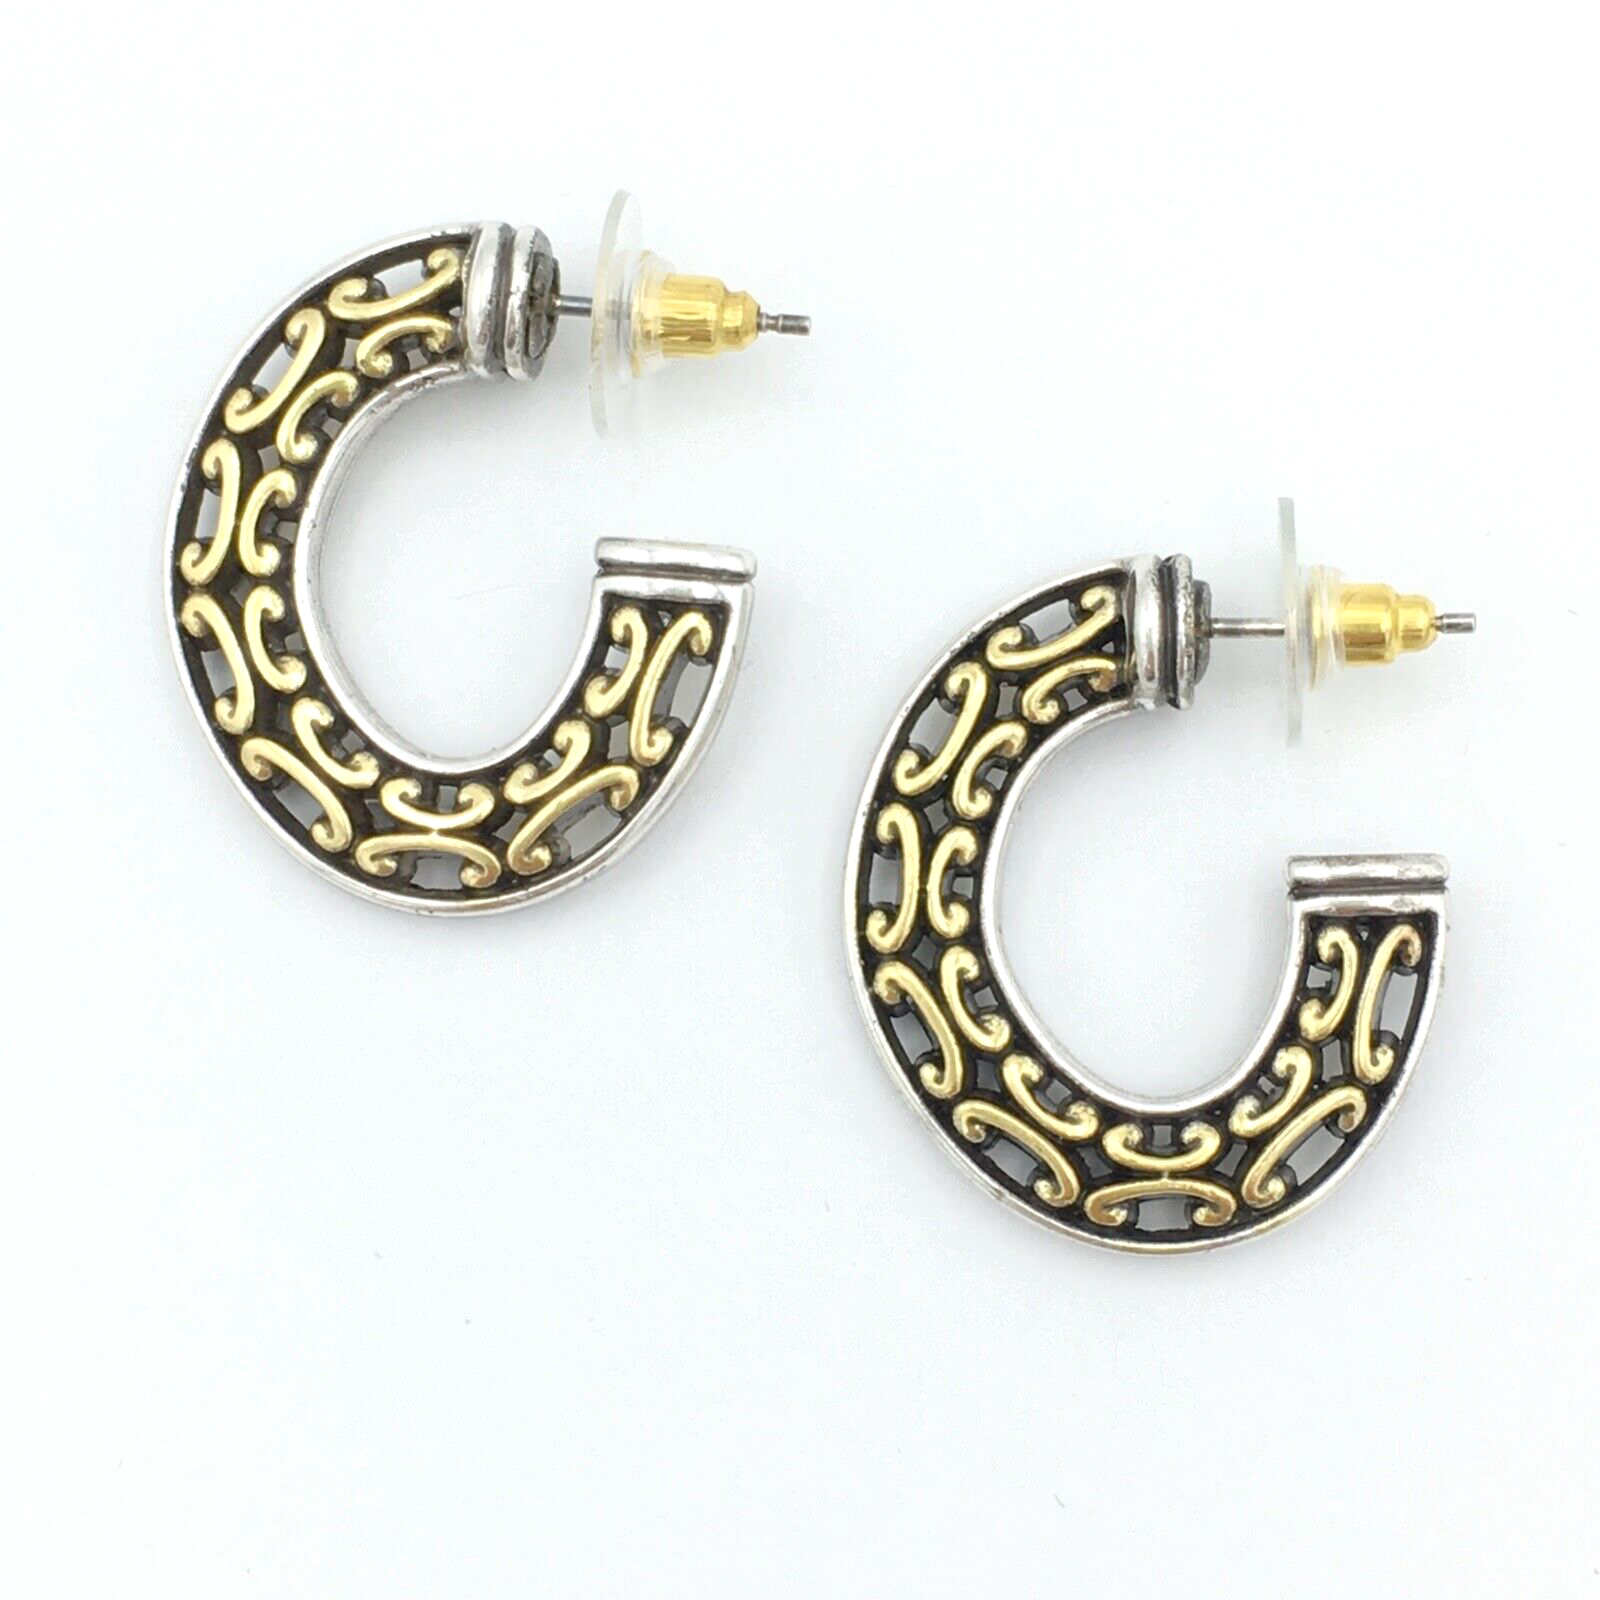 BRIGHTON two-tone flat half-hoop earrings - silver & gold-tone openwork C scroll - $25.00